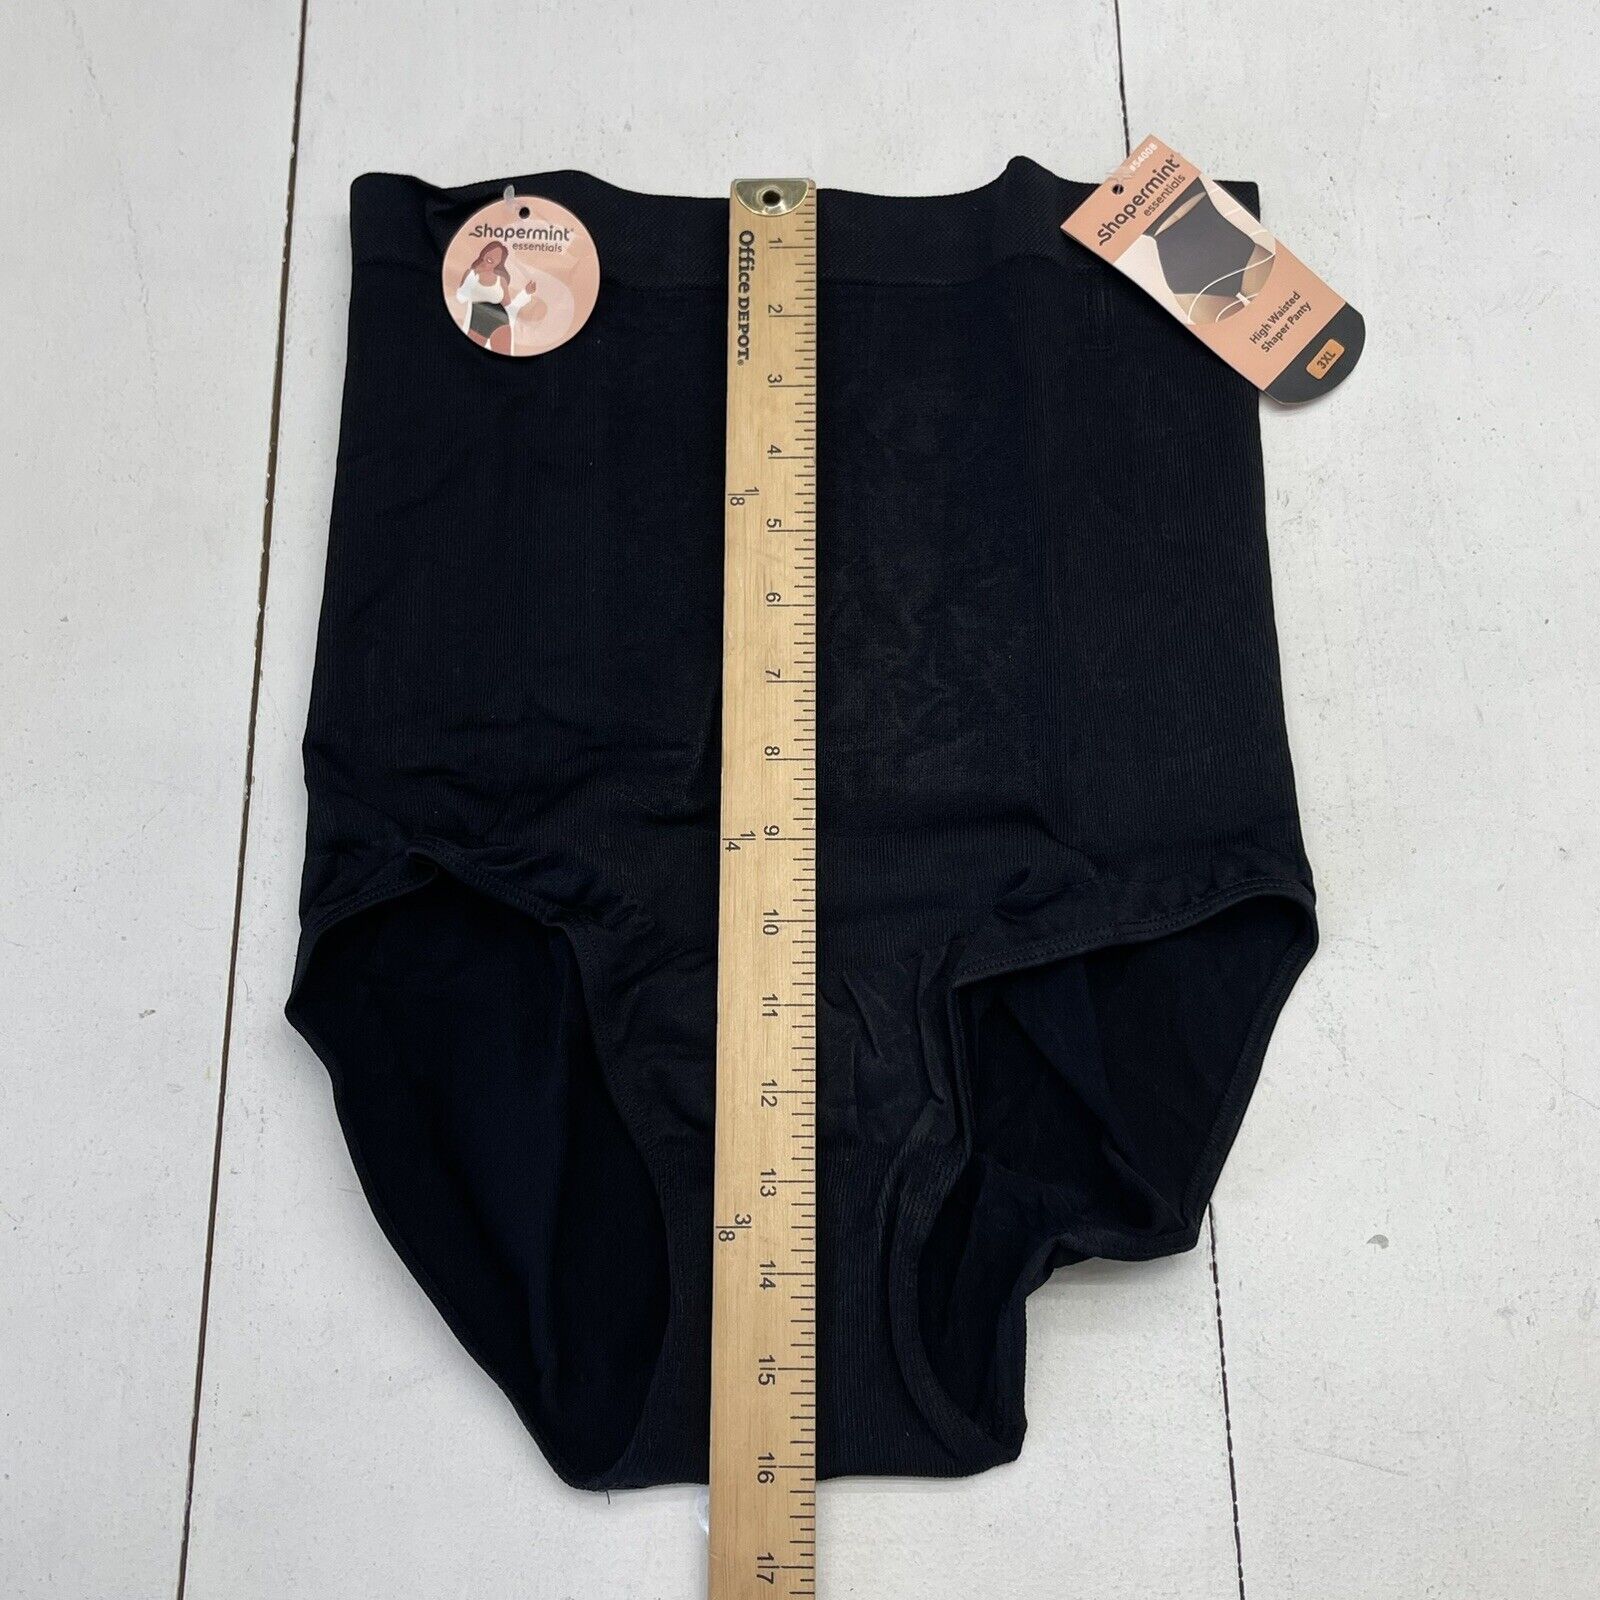 Shapermint Black High Waisted Shaper Panty Women's Size 3XL New